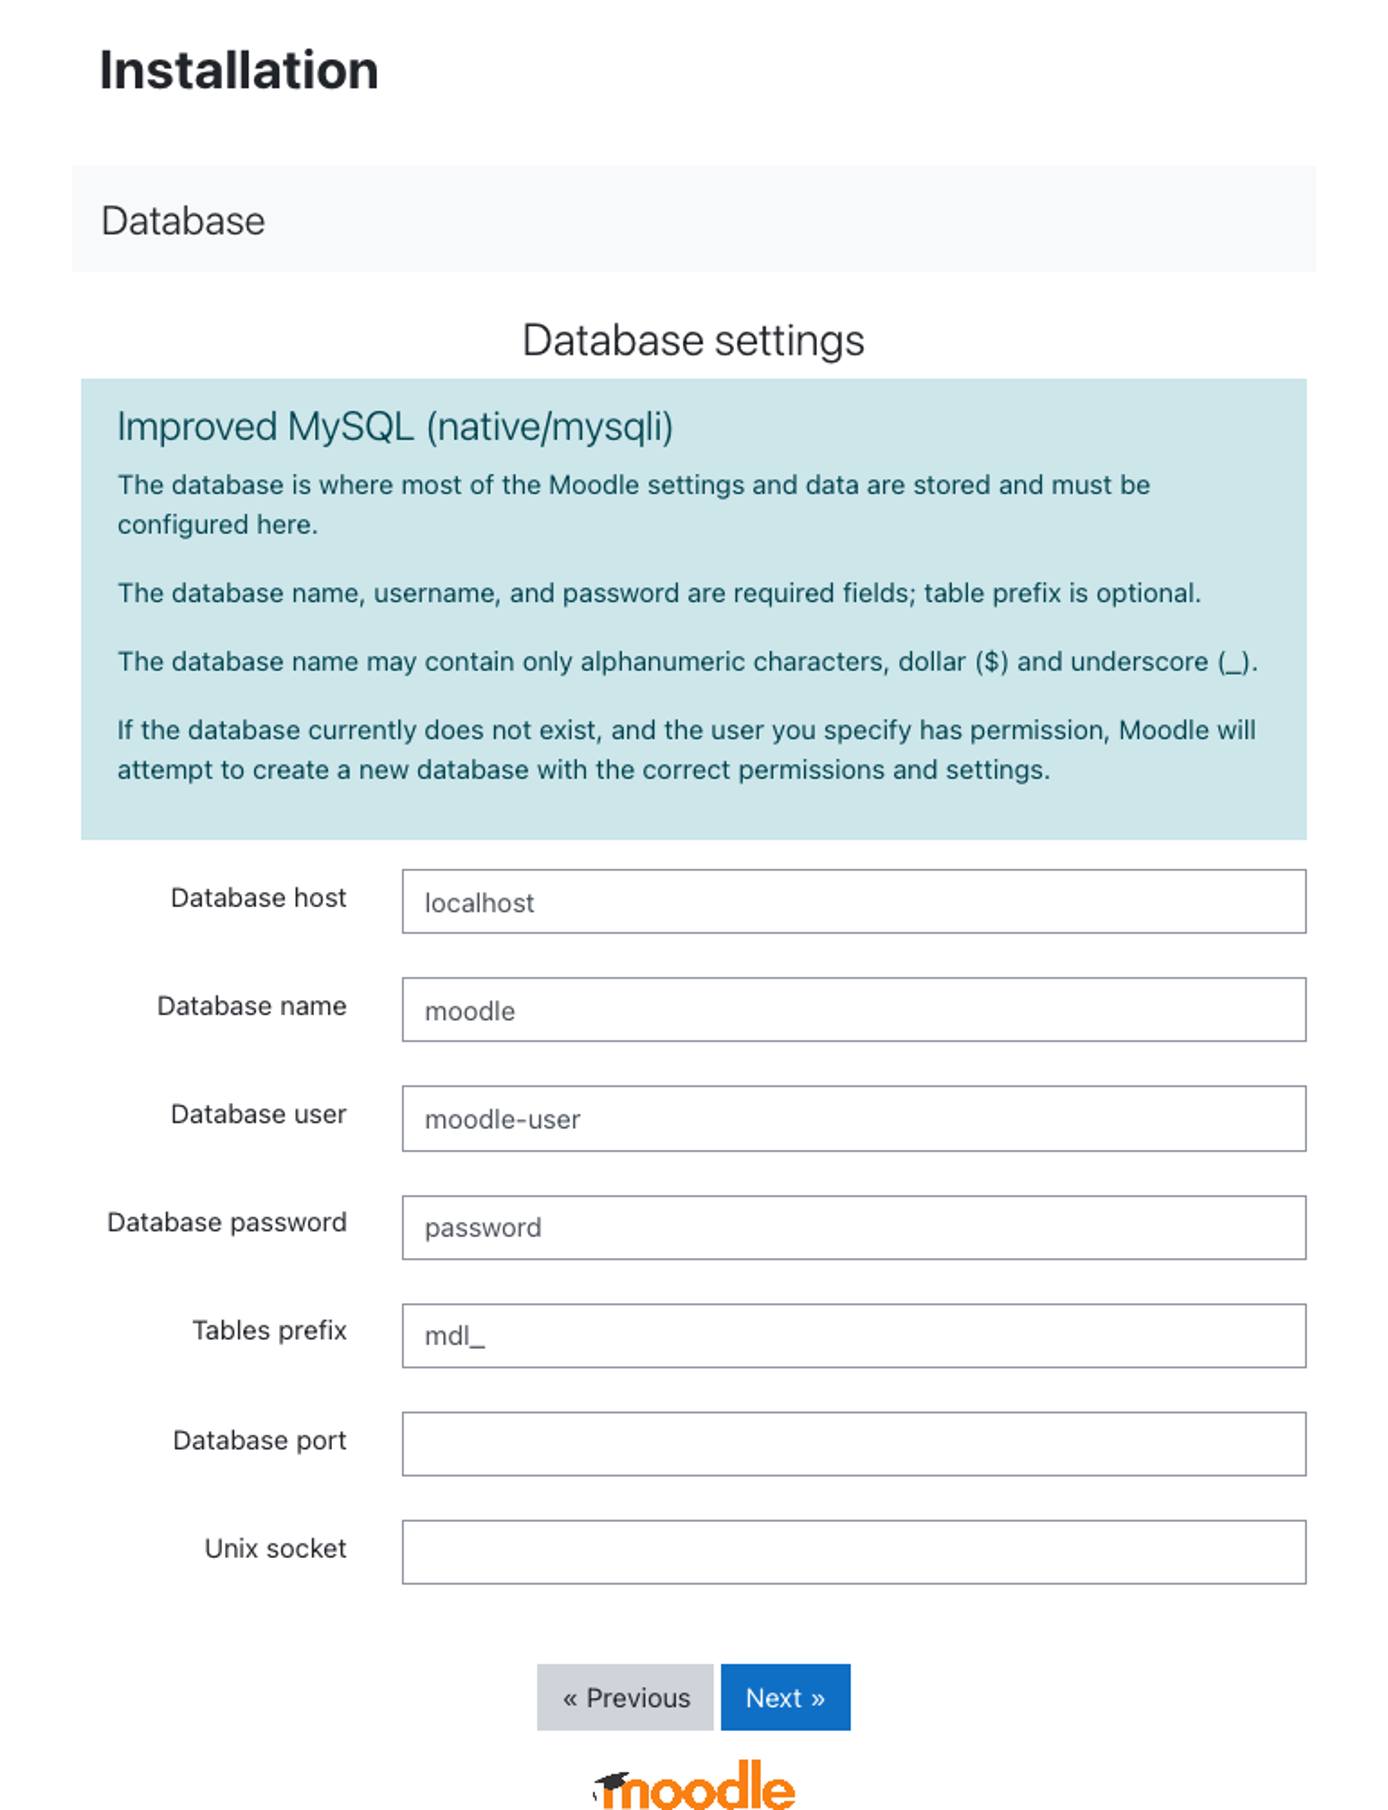 Enter database settings for Moodle